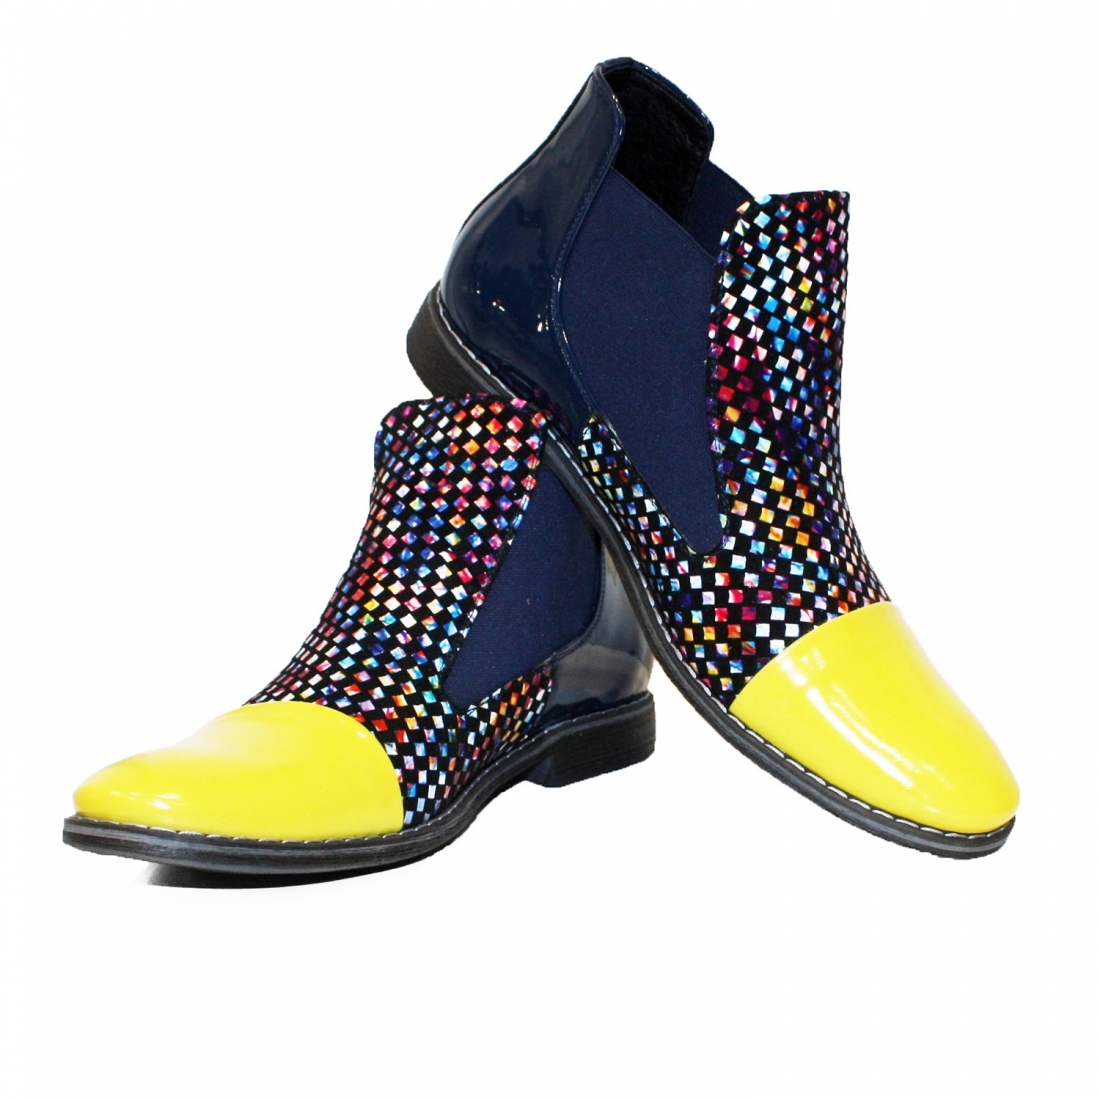 Modello Colorello - Bottines Chelsea - Handmade Colorful Italian Leather Shoes